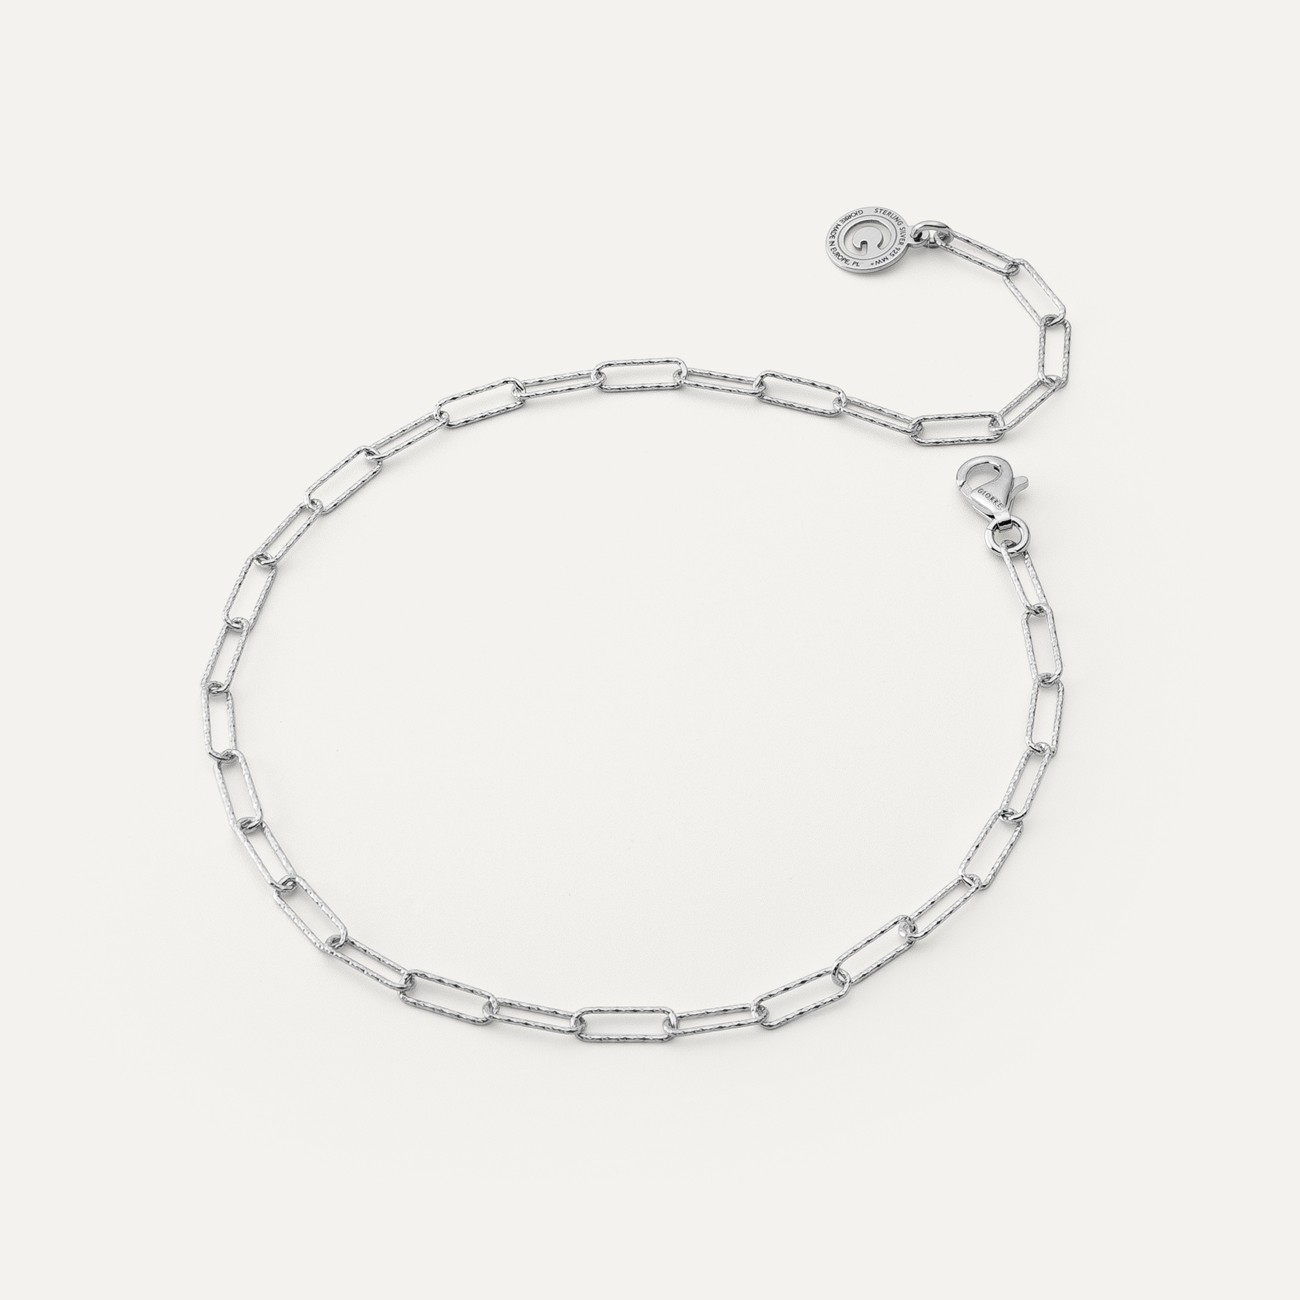 Giorre Woman's Bracelet 38496